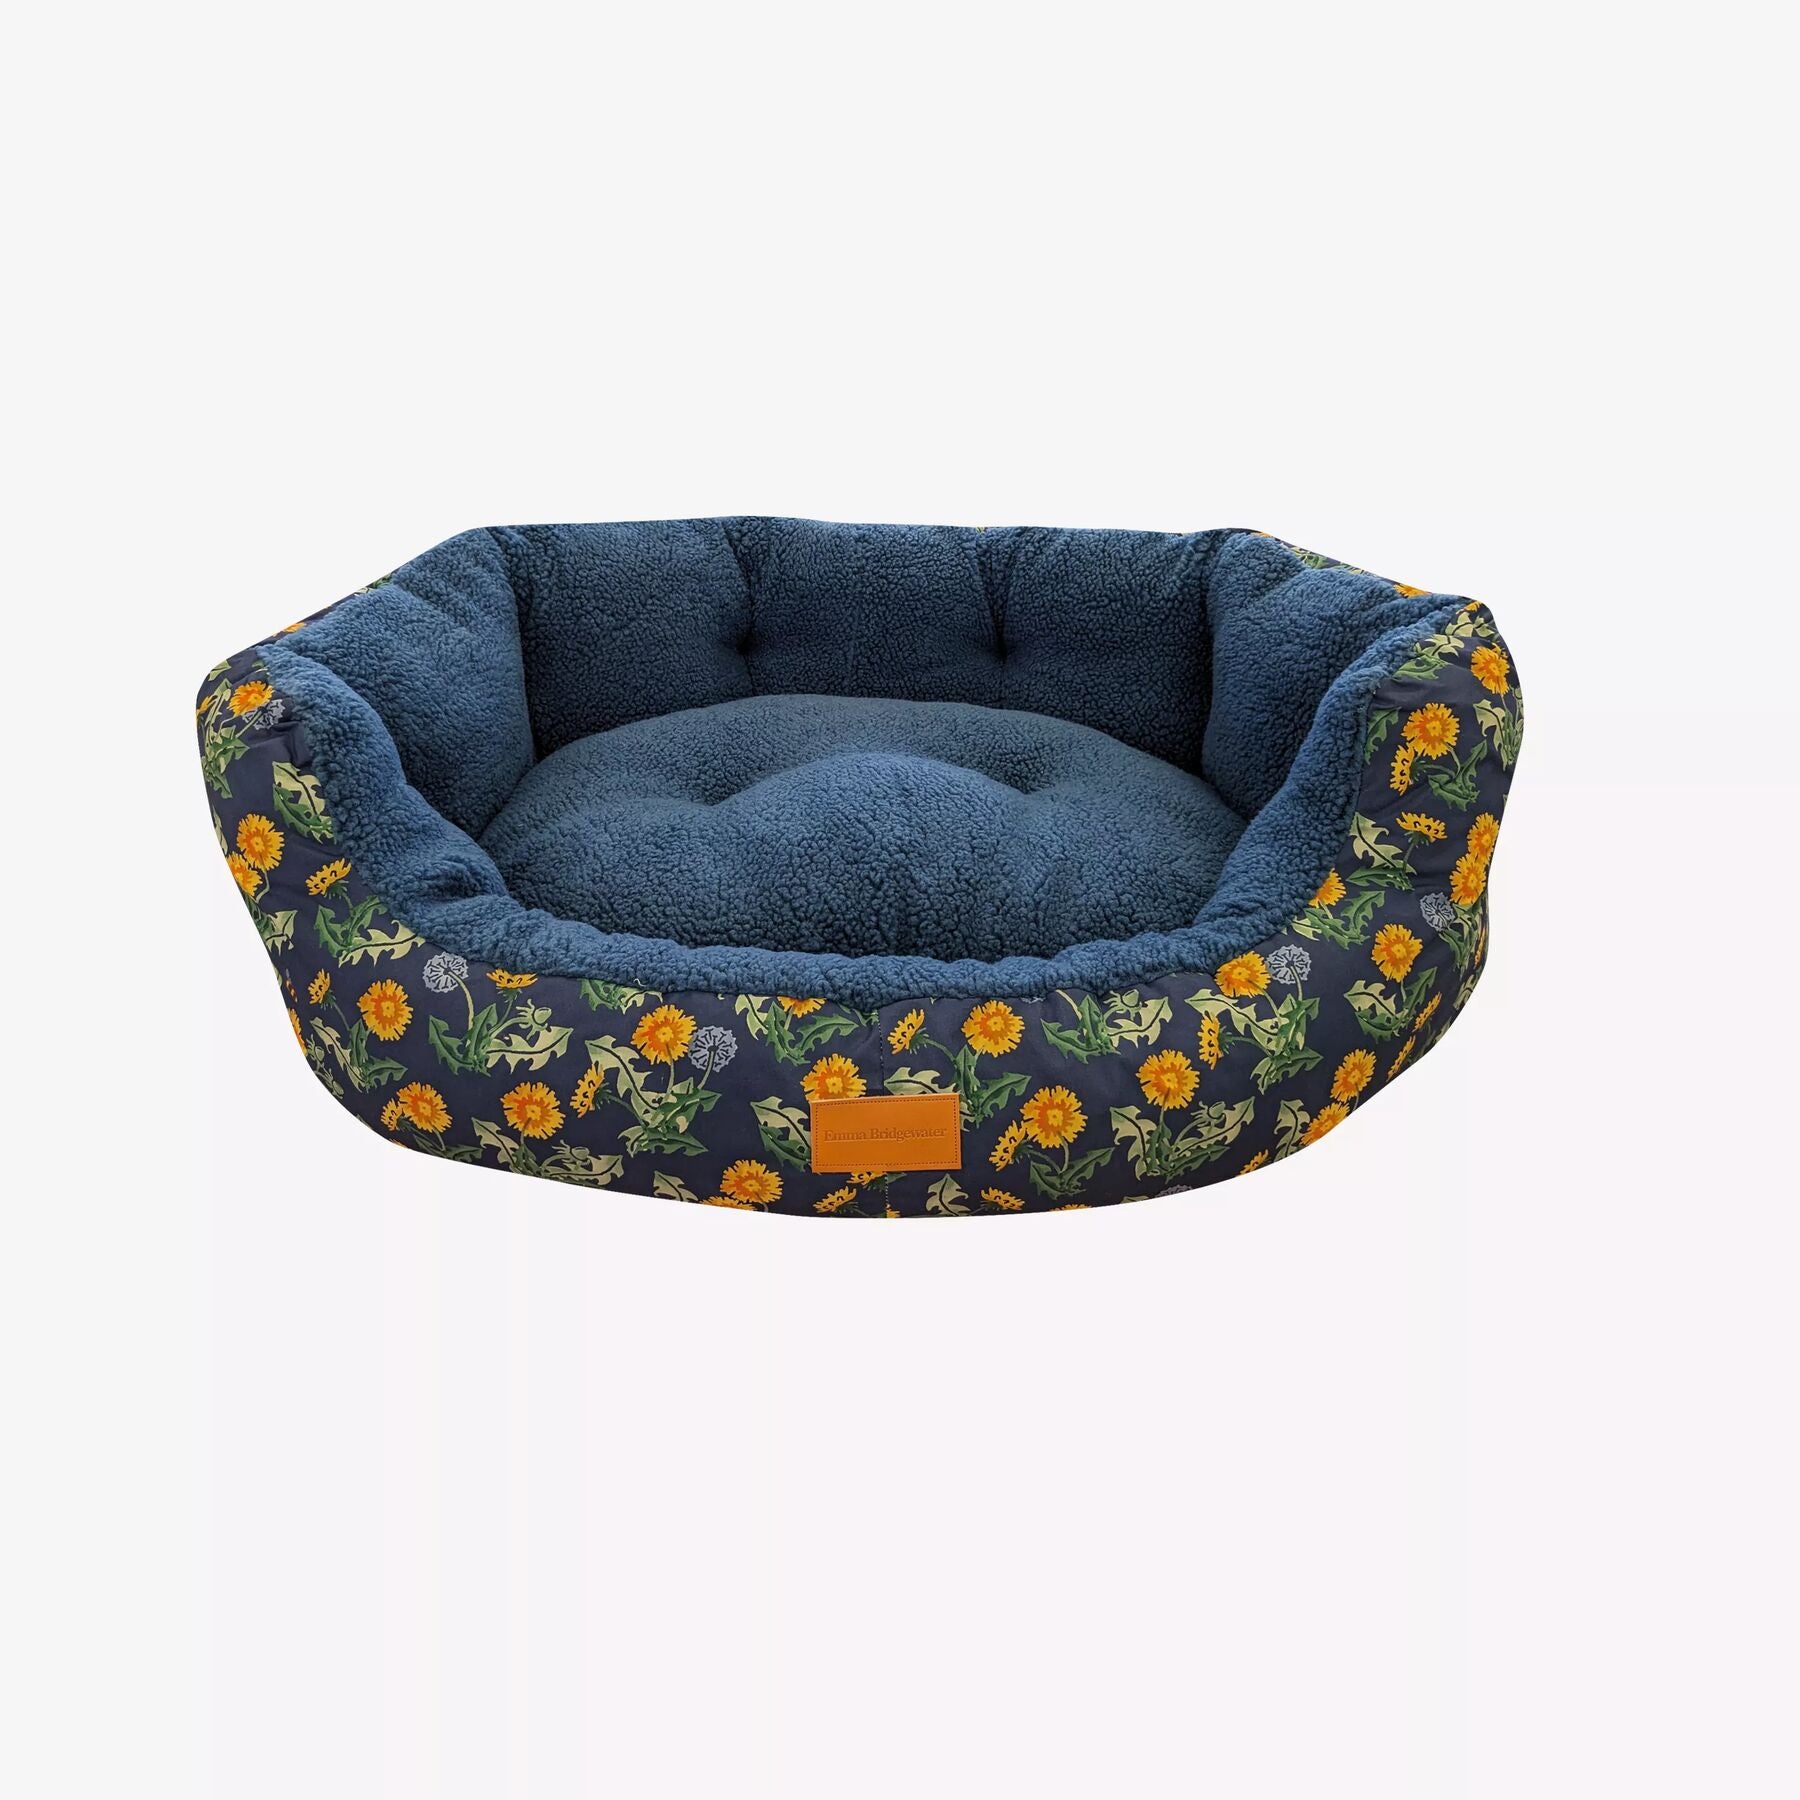 Emma Bridgewater |  Dandelion Waterproof Waxed Cotton Large Pet Bed